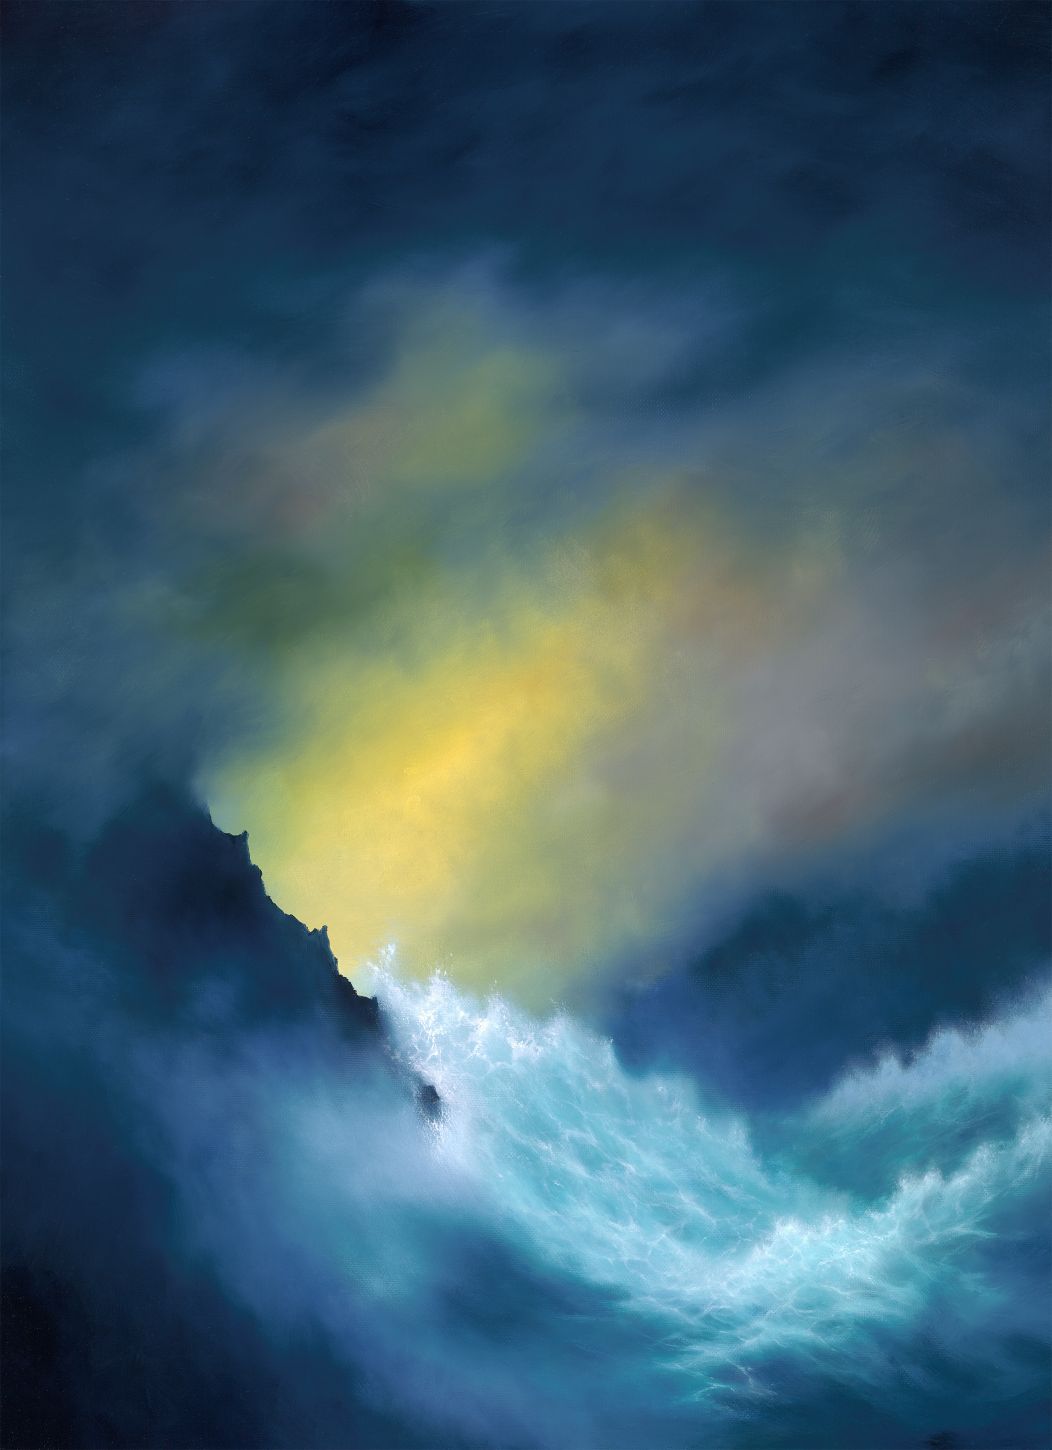 Andrew Craig - 'Eternal Sea' - Framed Limited  Edition